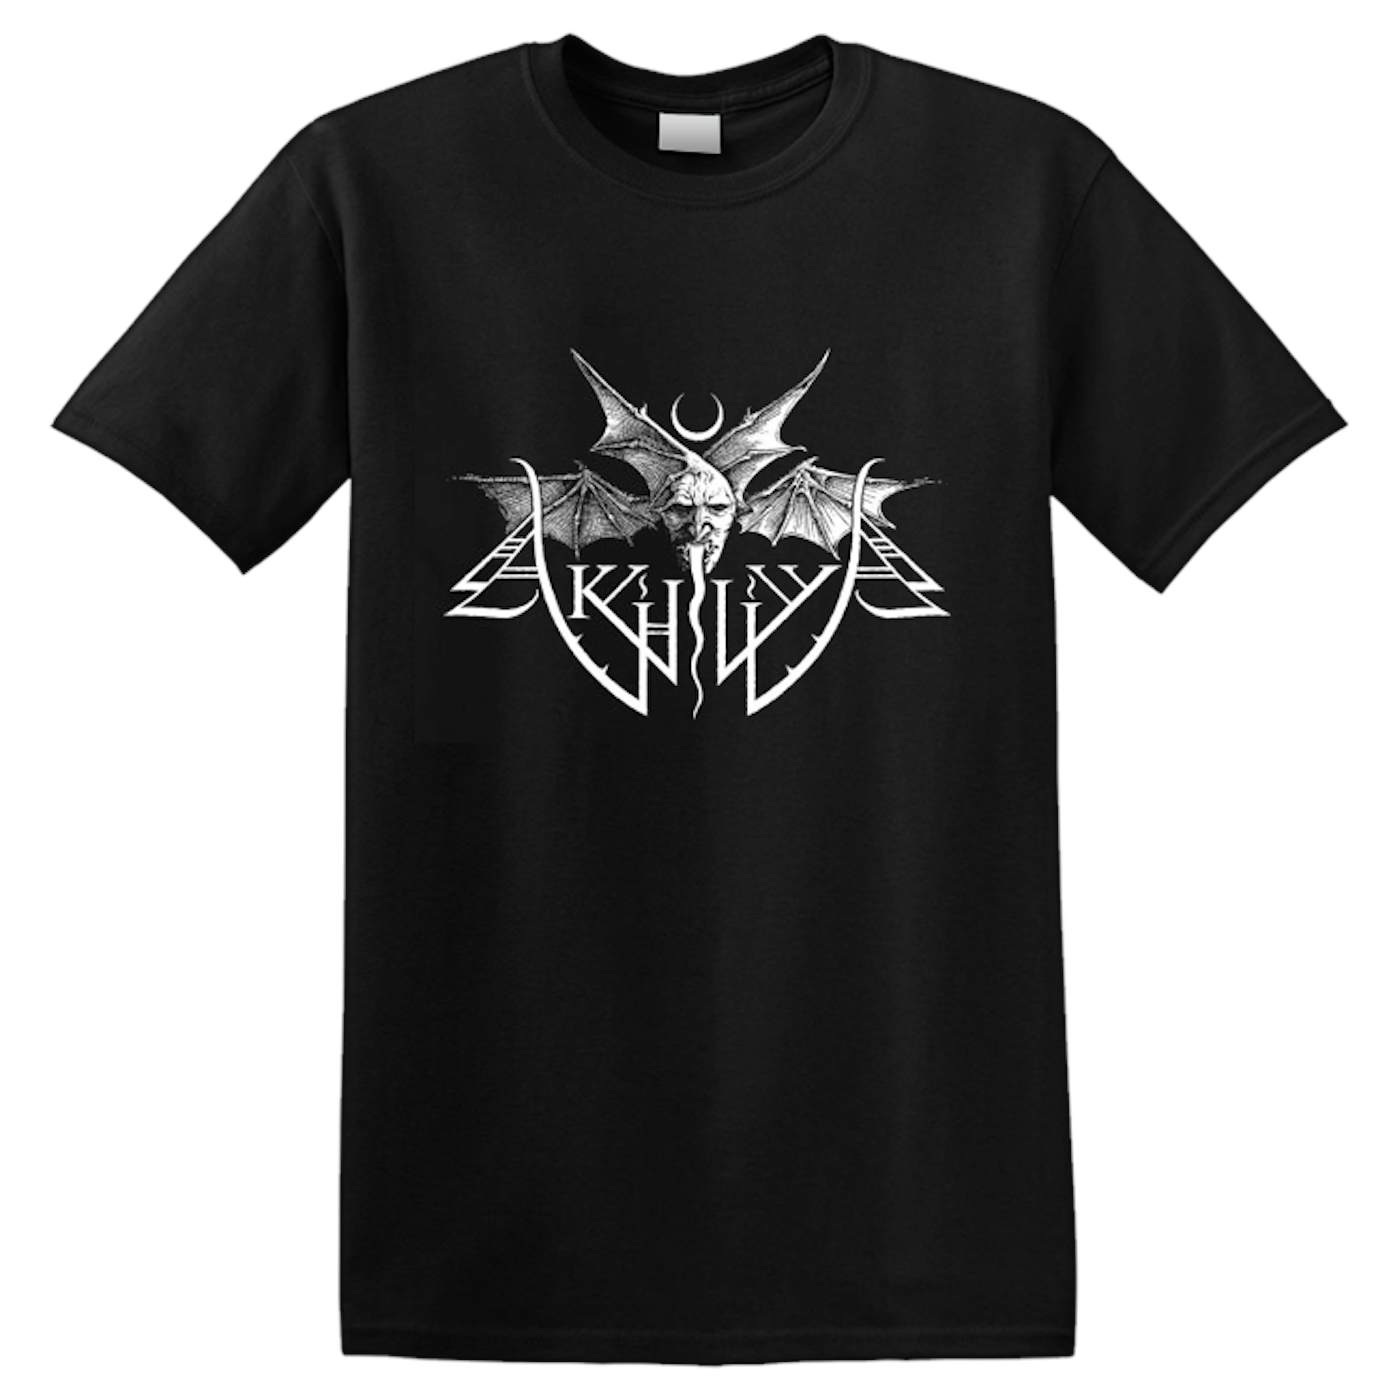 AKHLYS - 'Logo' T-Shirt